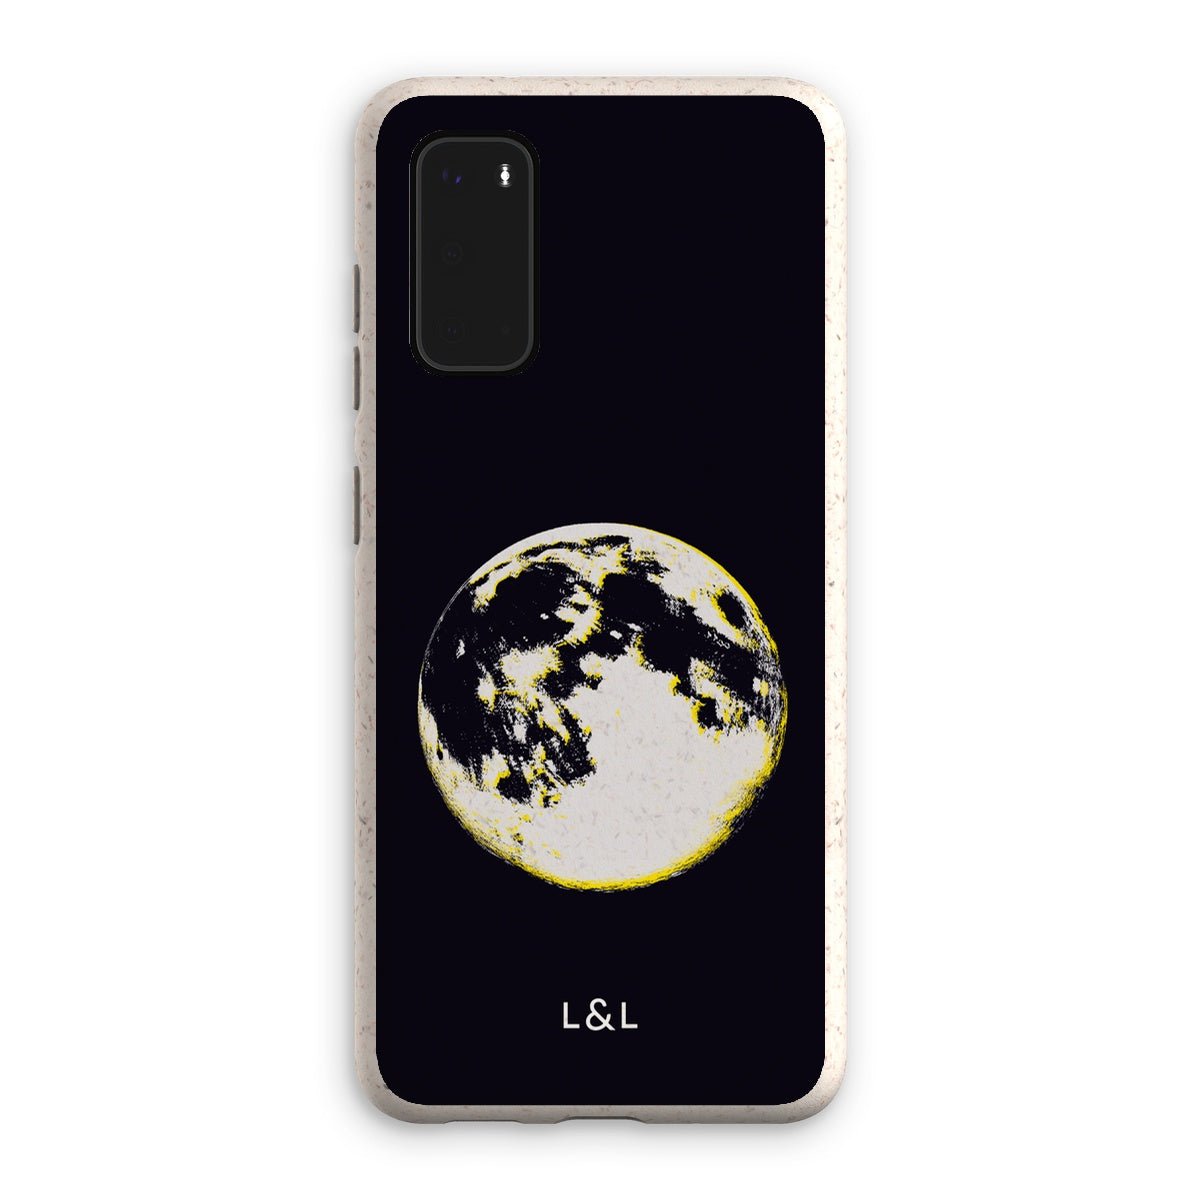 Neon moon Eco Phone Case - Loam & Lore